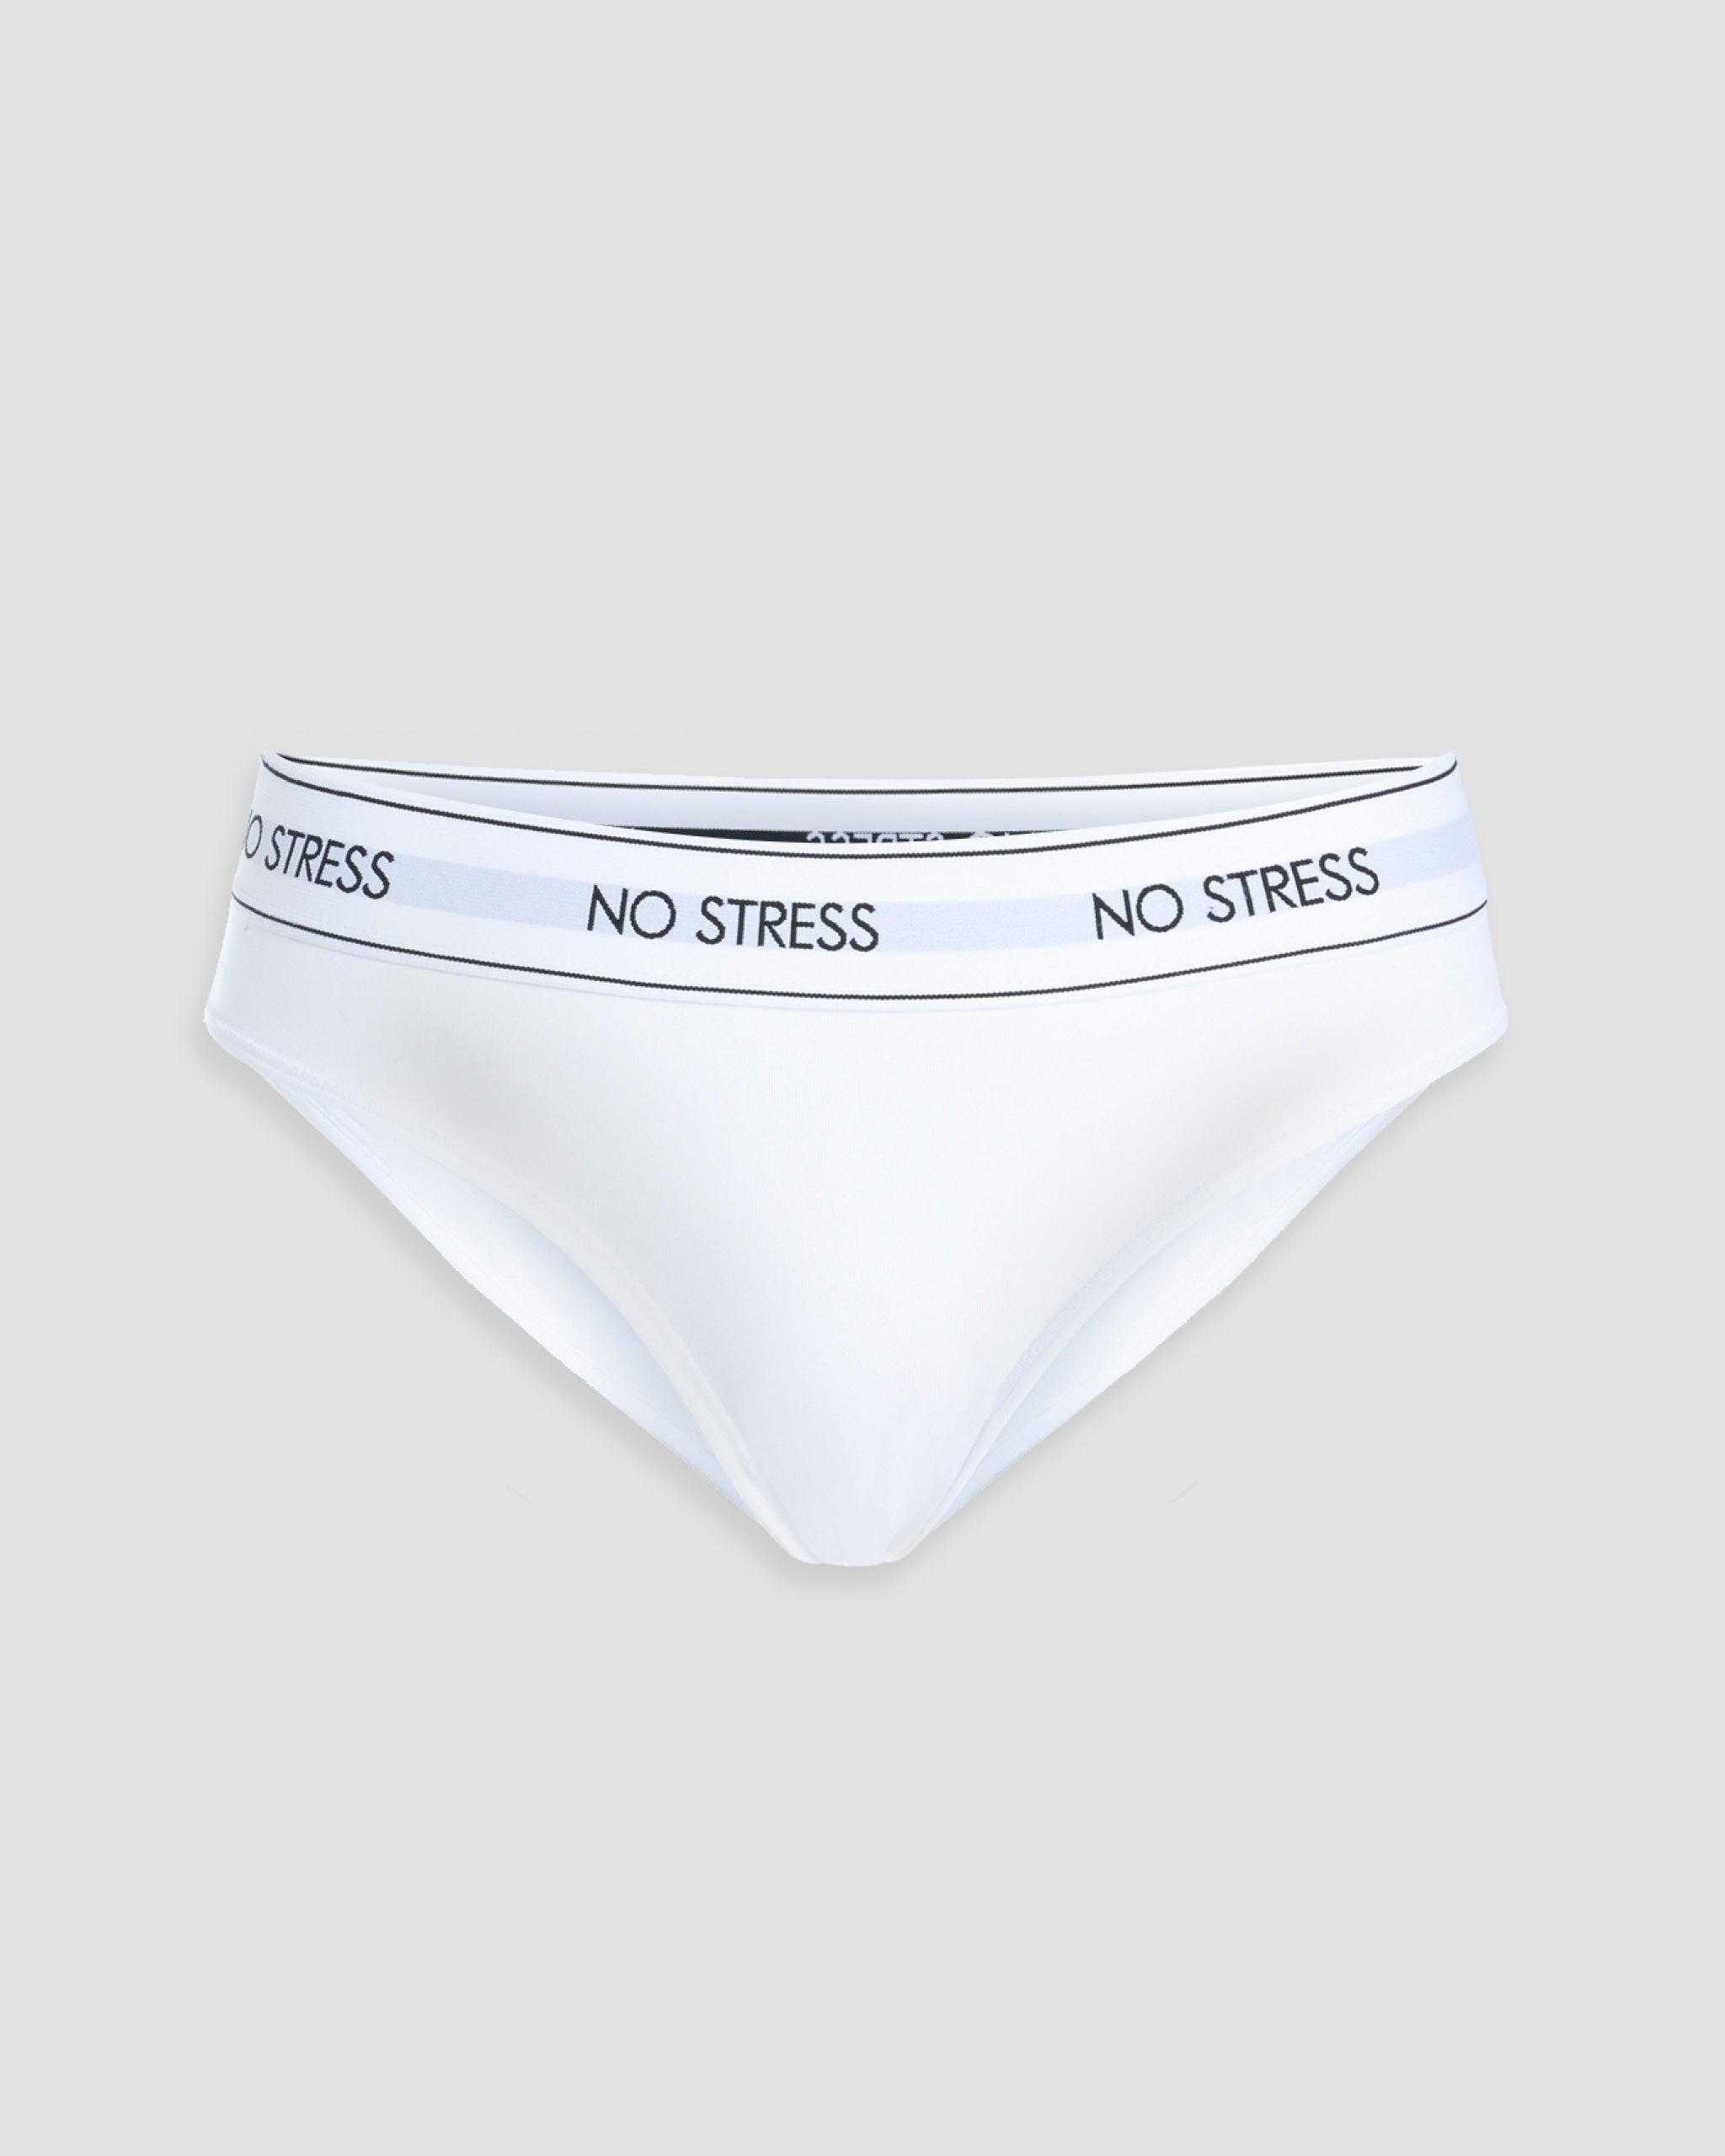 No Stress women's organic cotton briefs